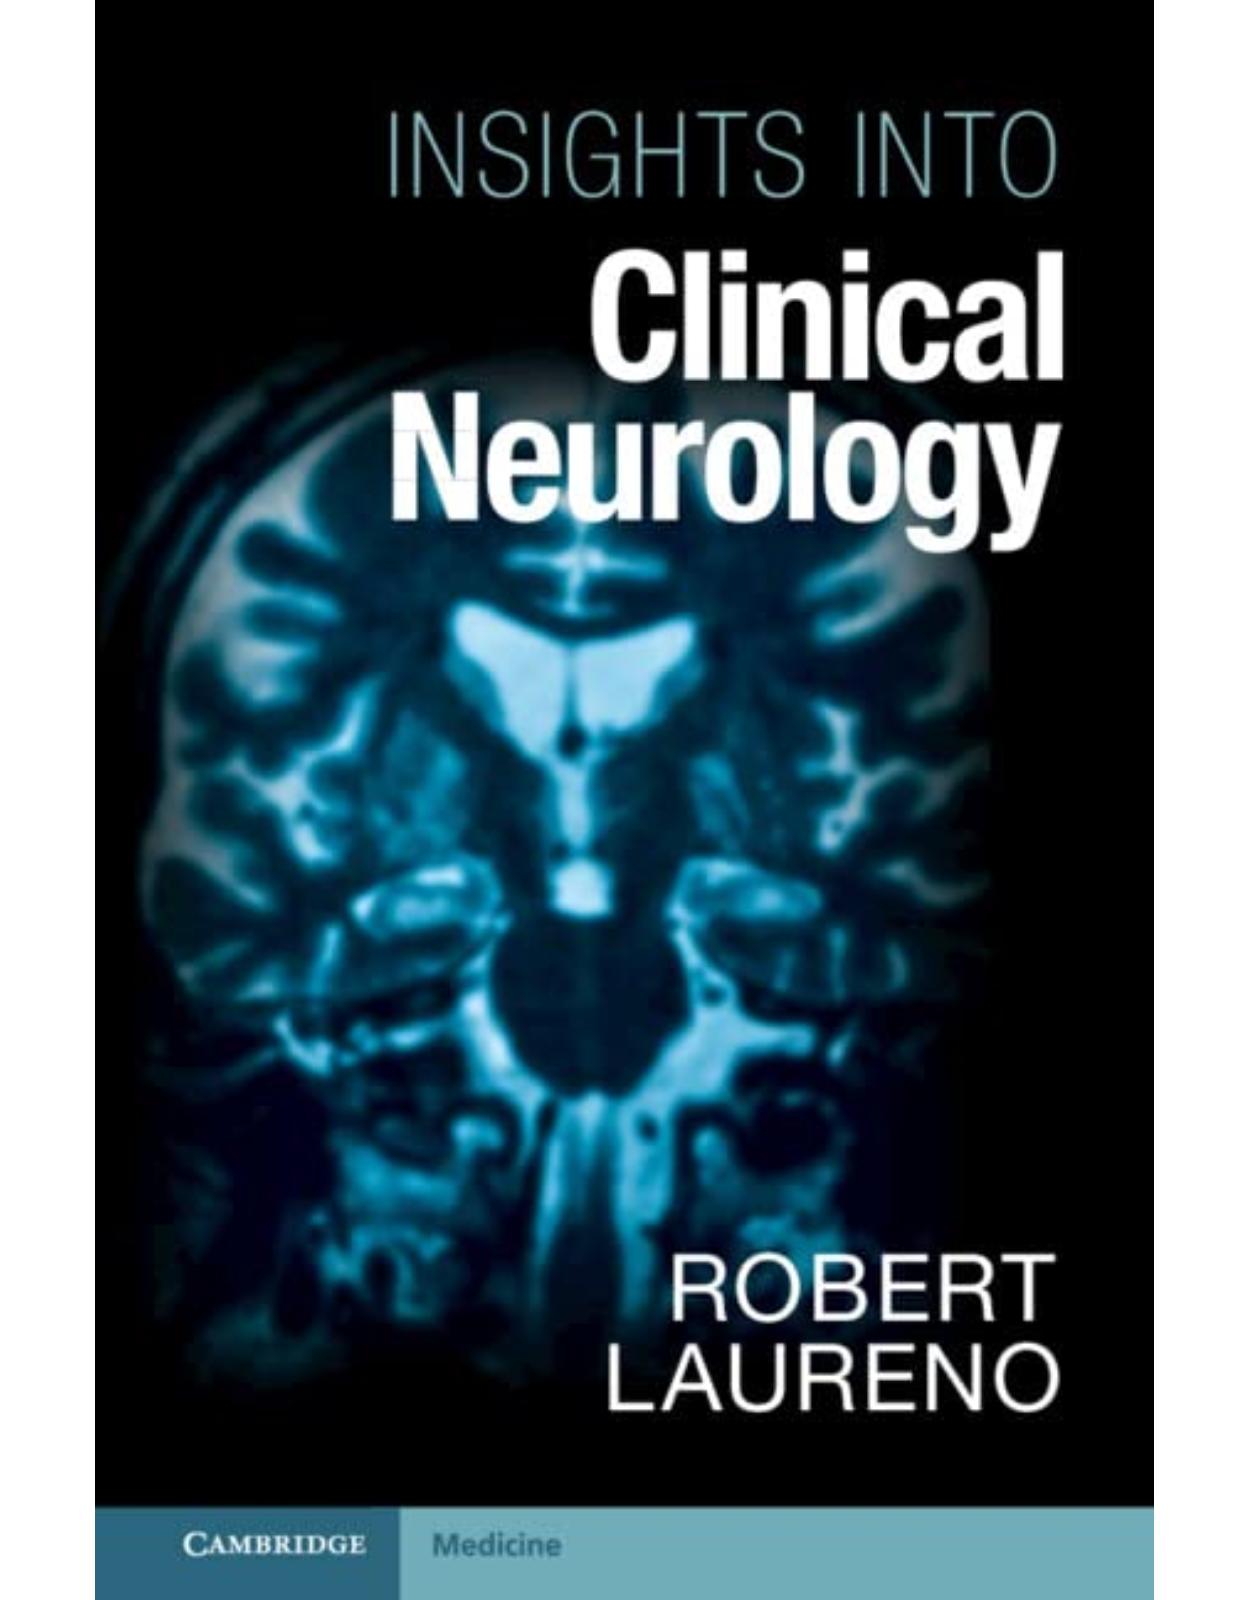 Insights into Clinical Neurology